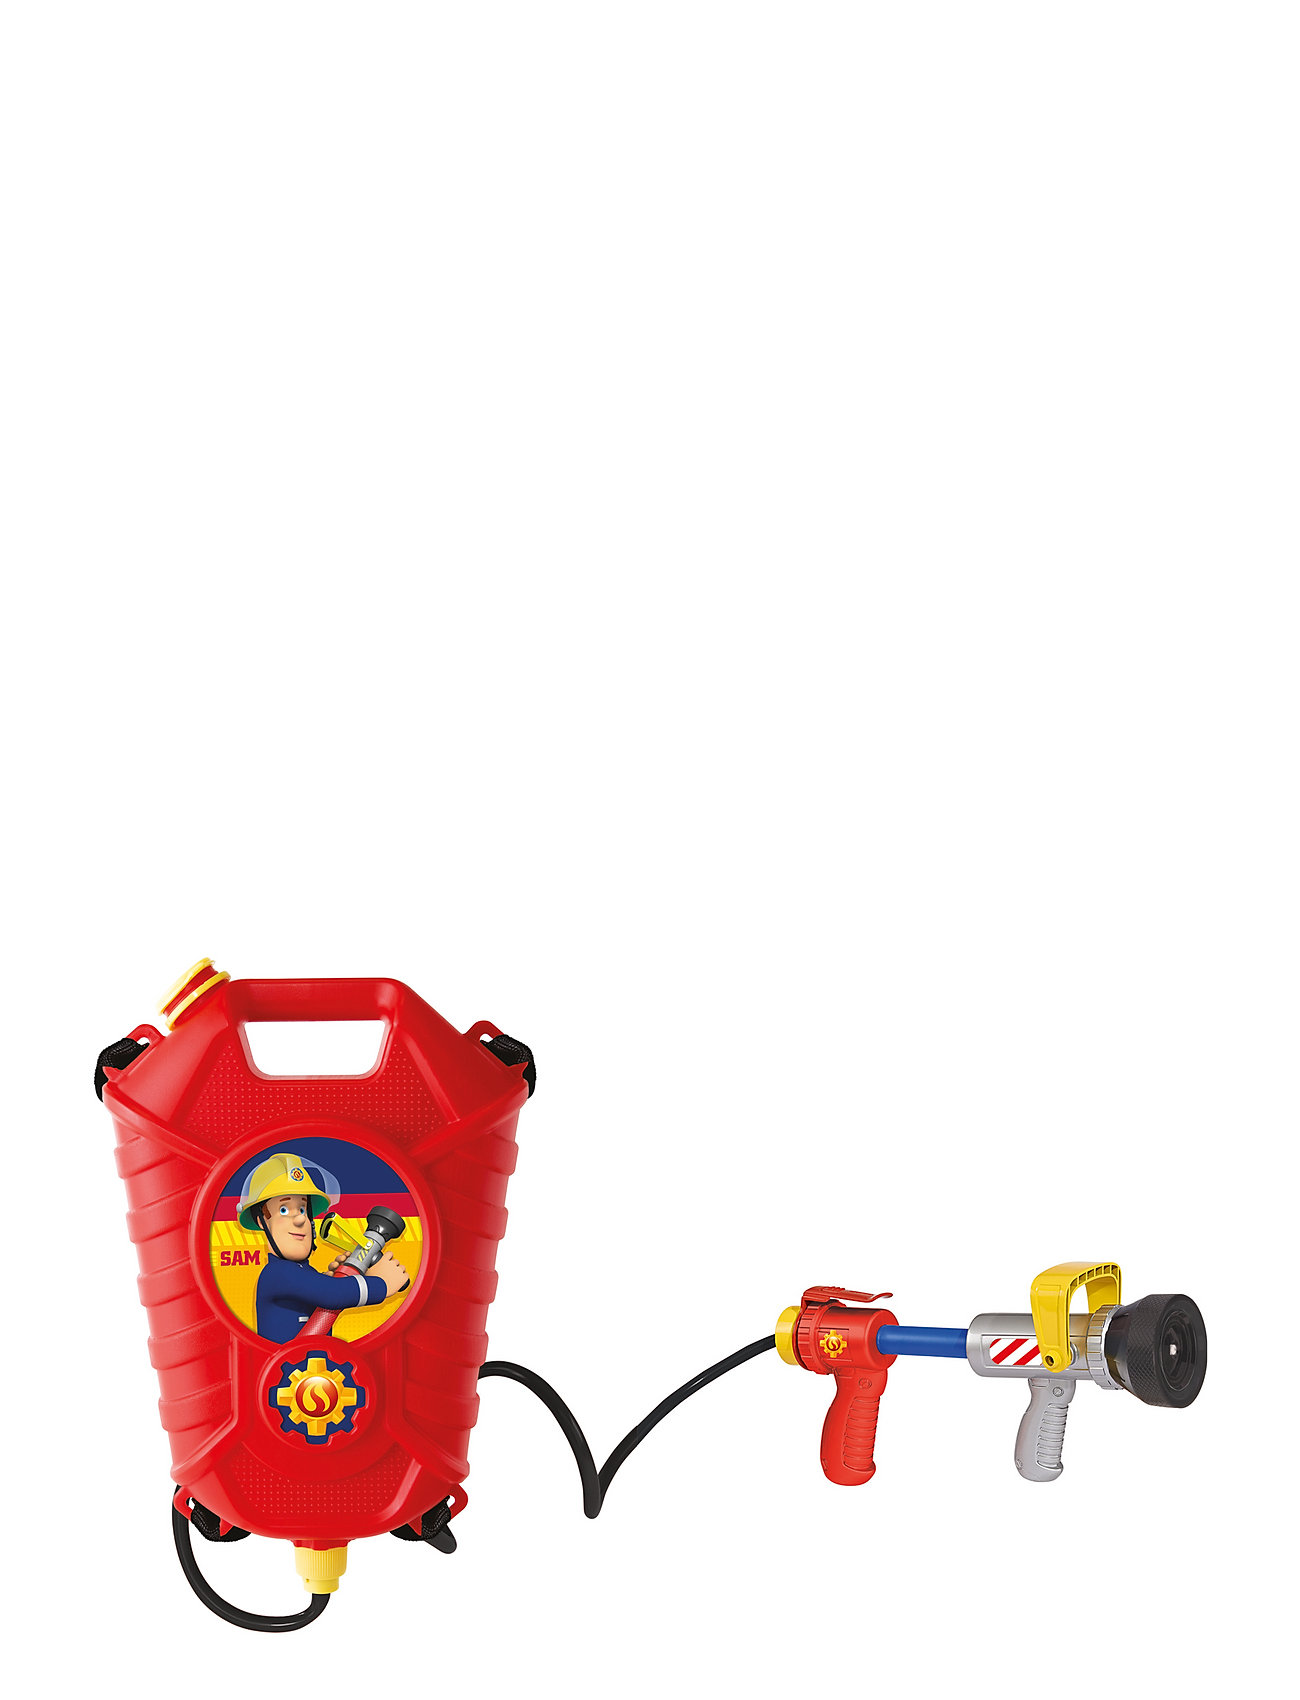 "Brandmand Sam" "Fireman Sam Tank Backpack Blaster Toys Bath & Water Other Red Brandmand